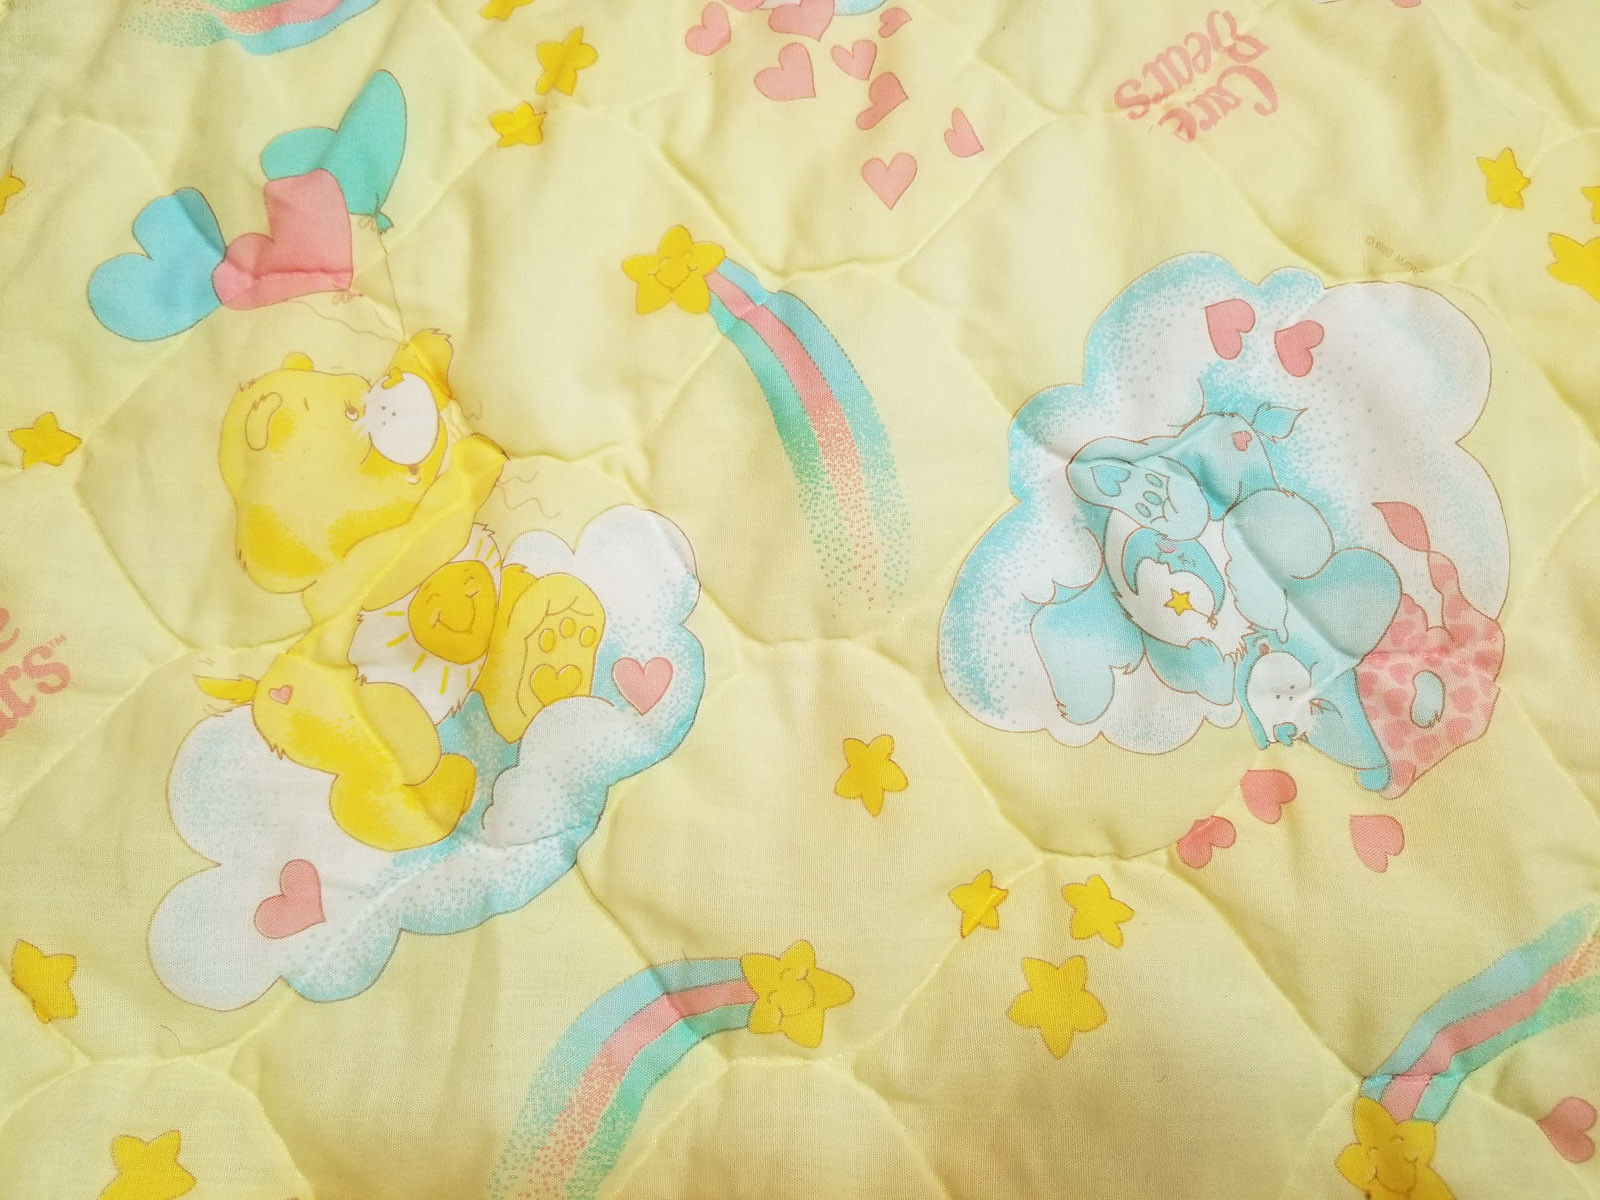 CARE BEARS VTG Baby QUILT Blanket CHEER WISH FUNSHINE Crib BEDDING Rainbow Cloud